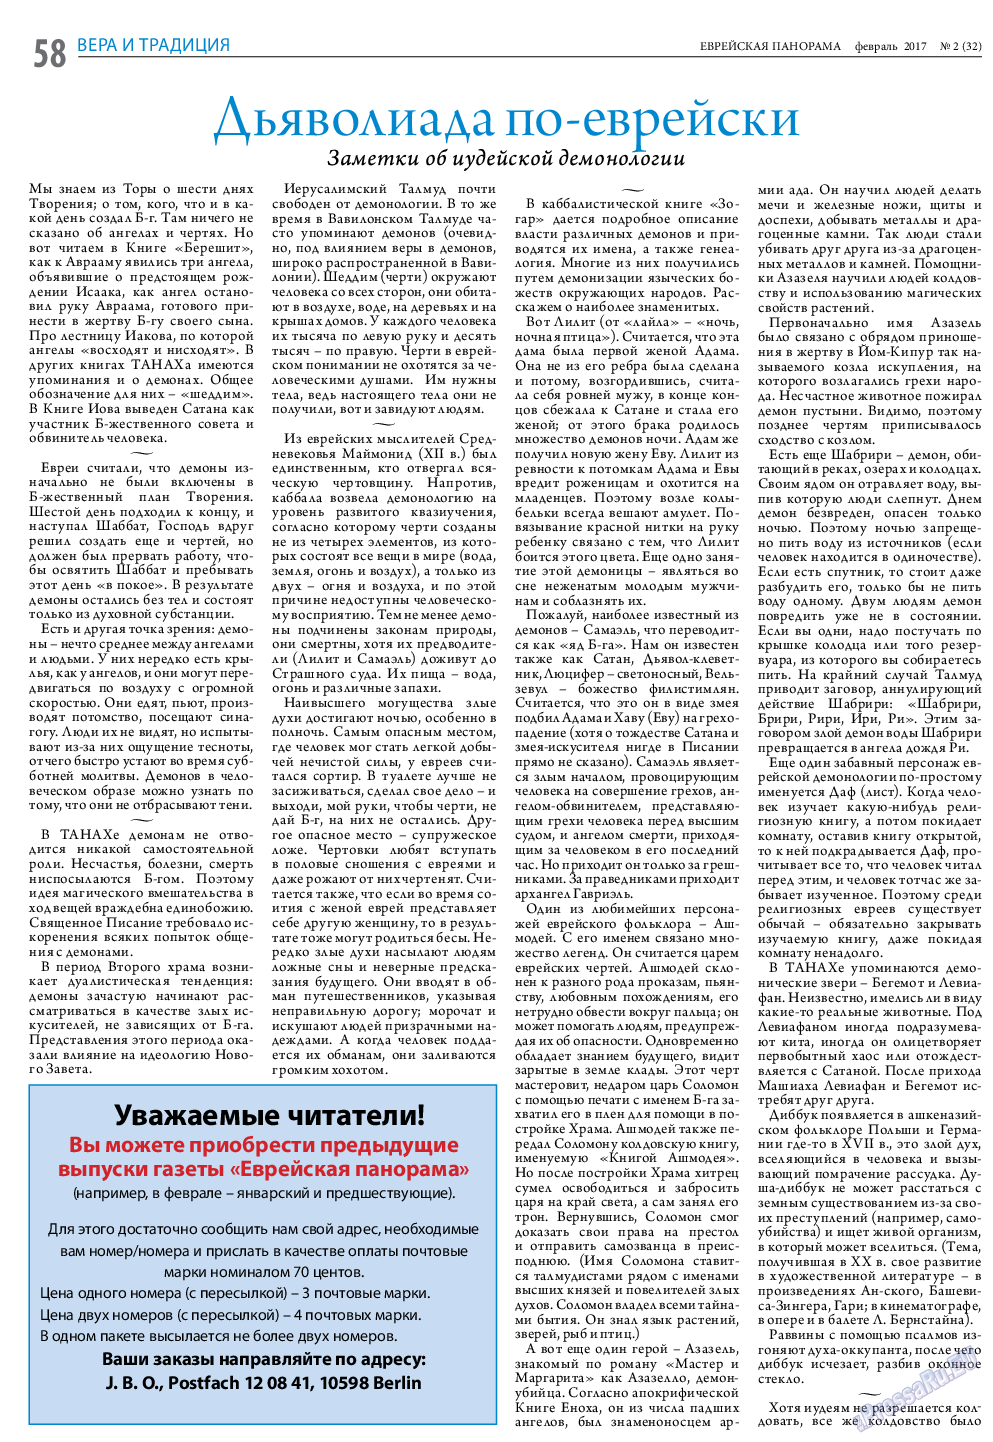 Еврейская панорама, газета. 2017 №2 стр.58